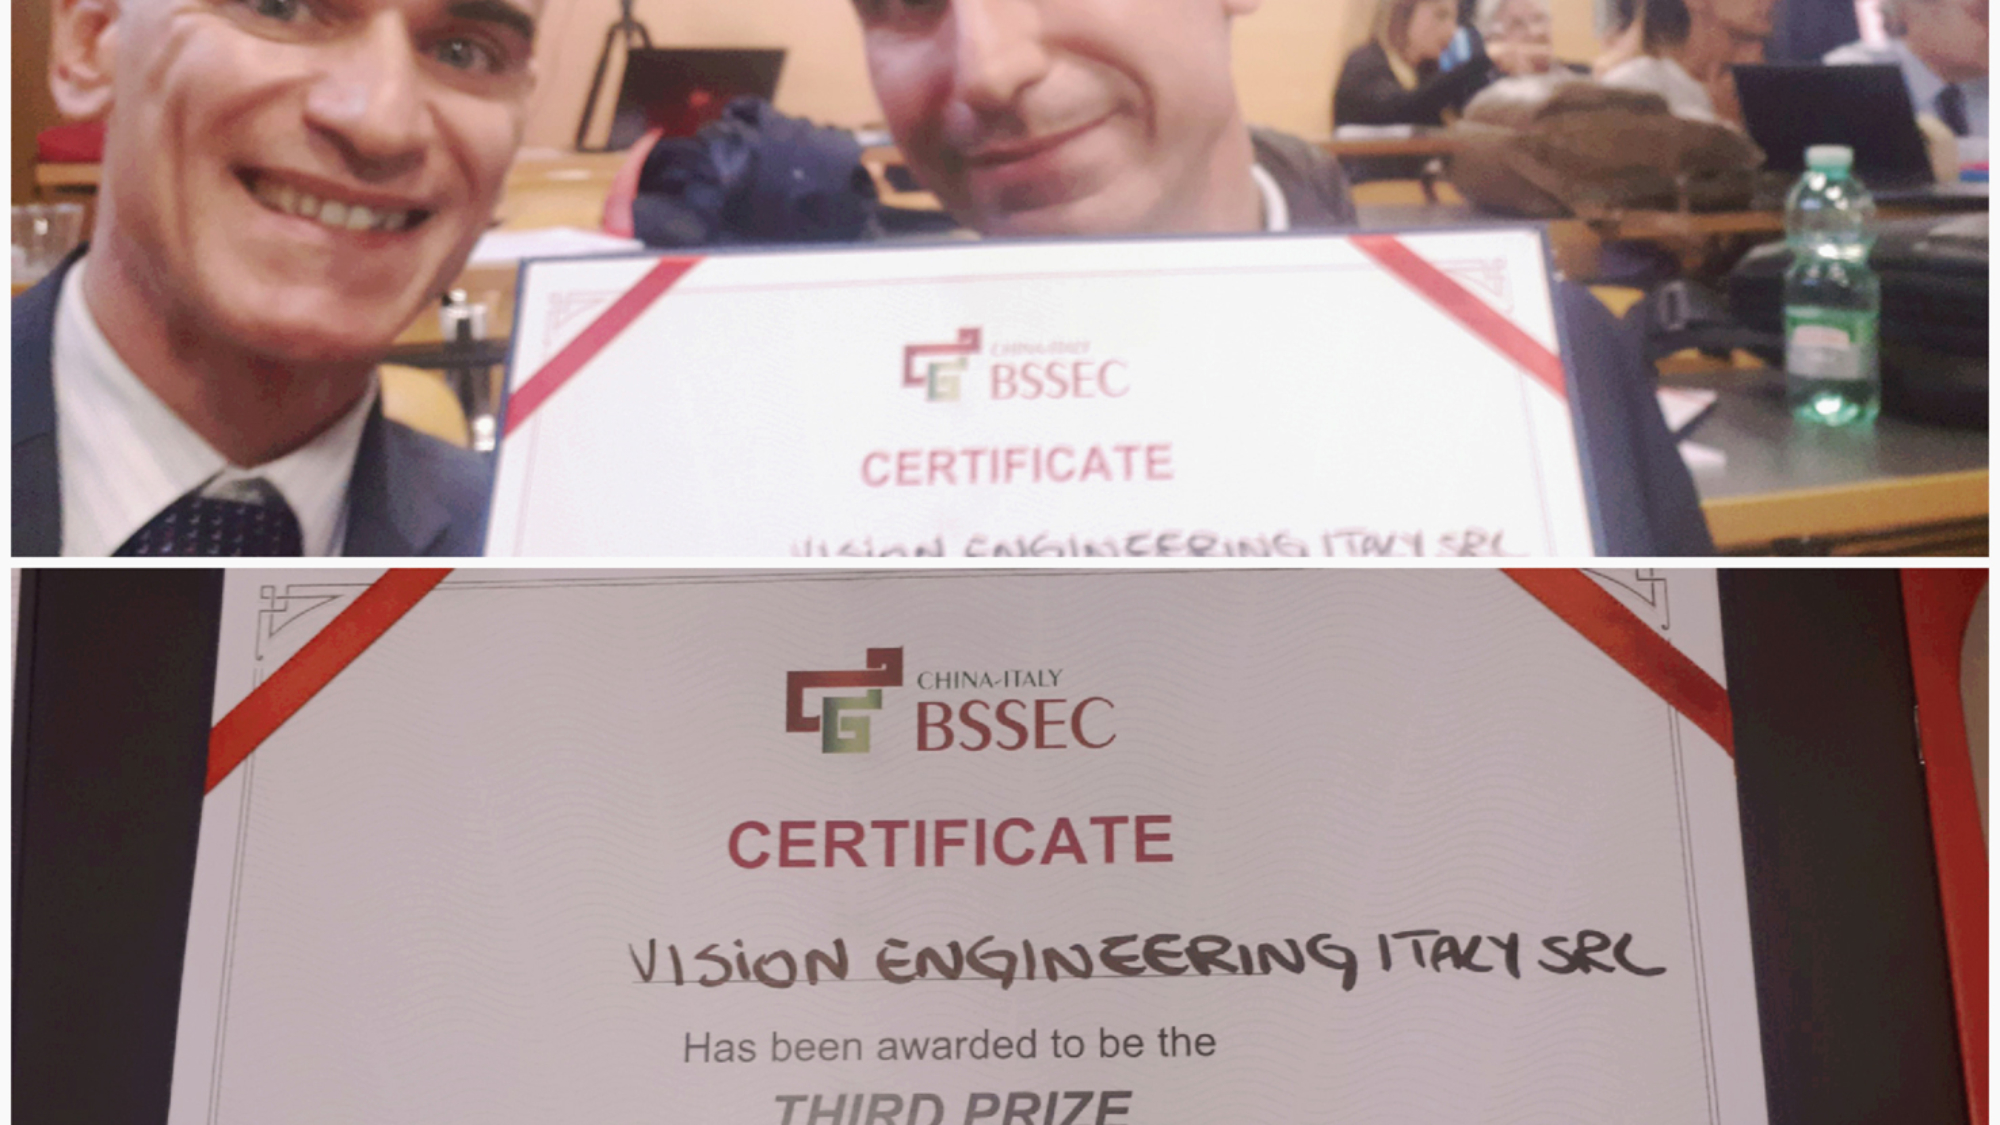 Third Prize BSSEC